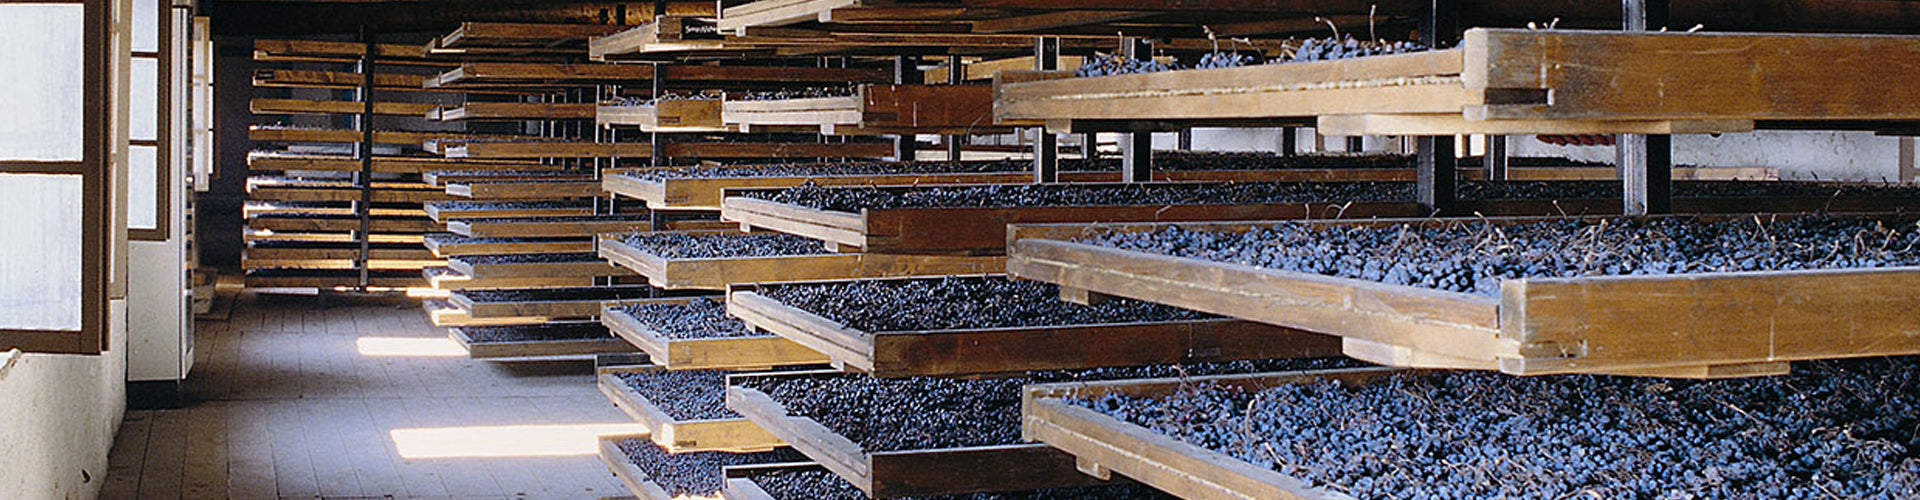 The grape drying loft at Serègo Alighieri